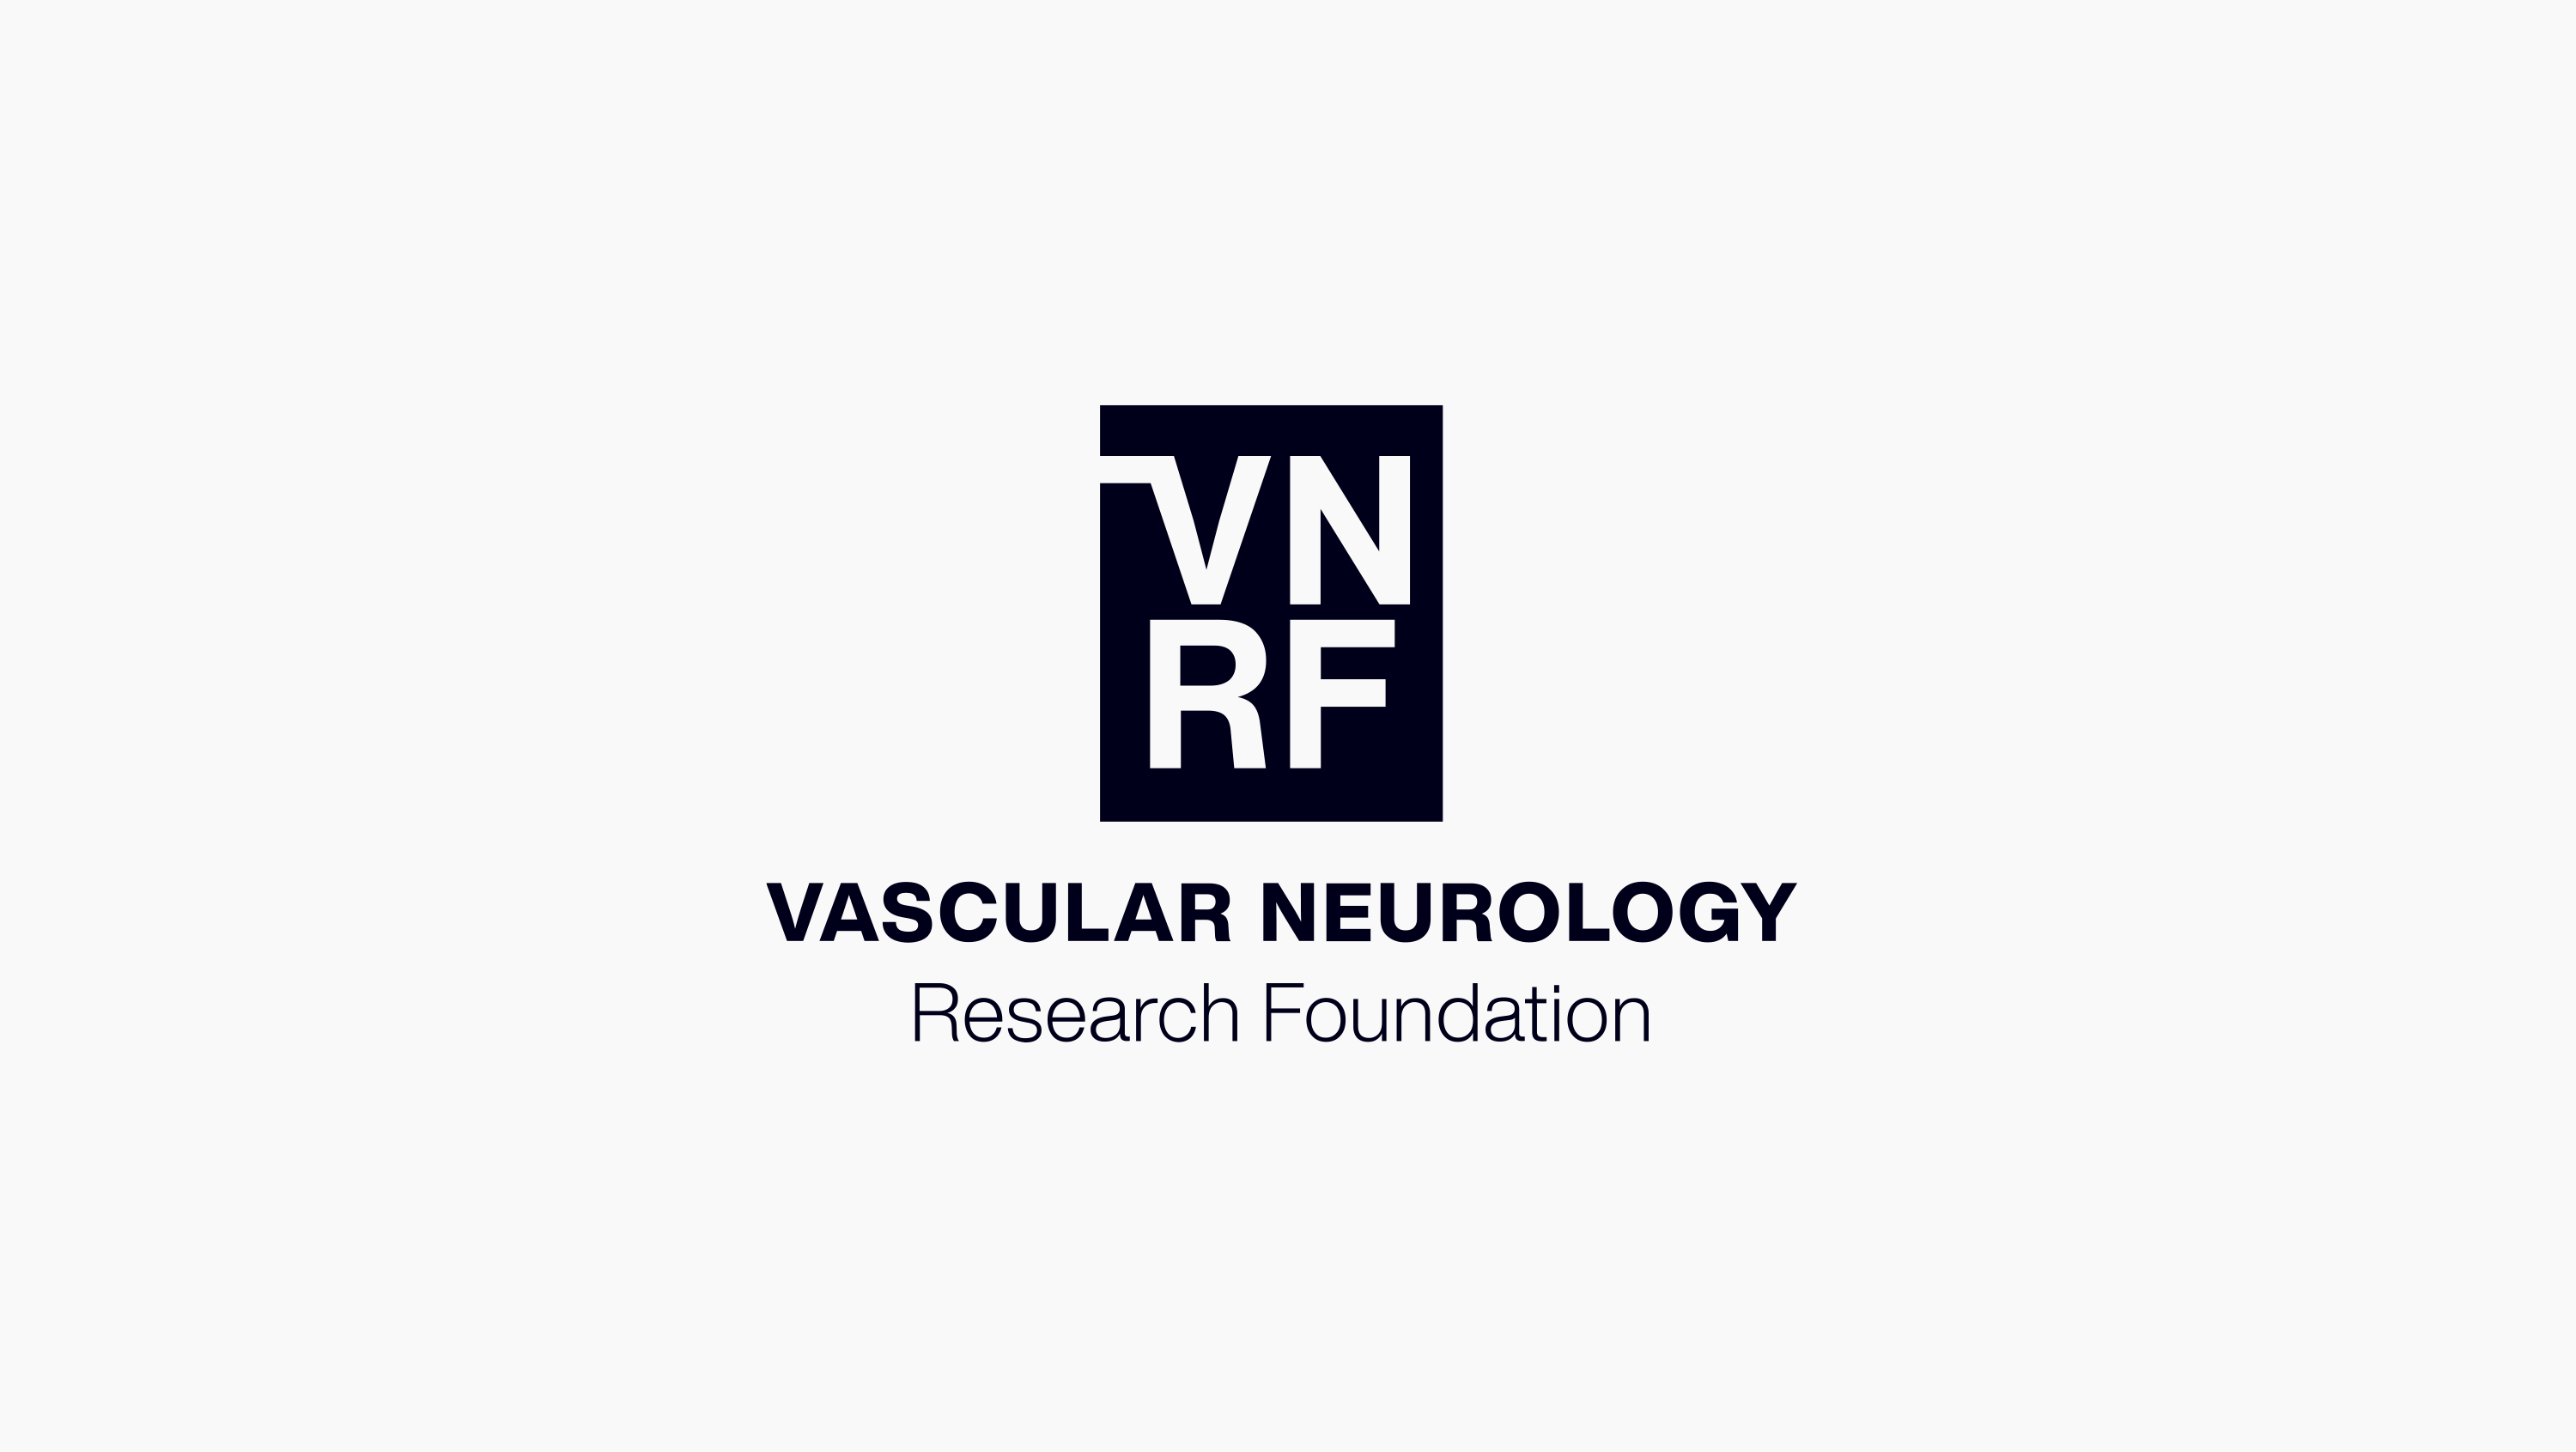 JamJo Logo Design Services - Vascular Neurology Research Foundation